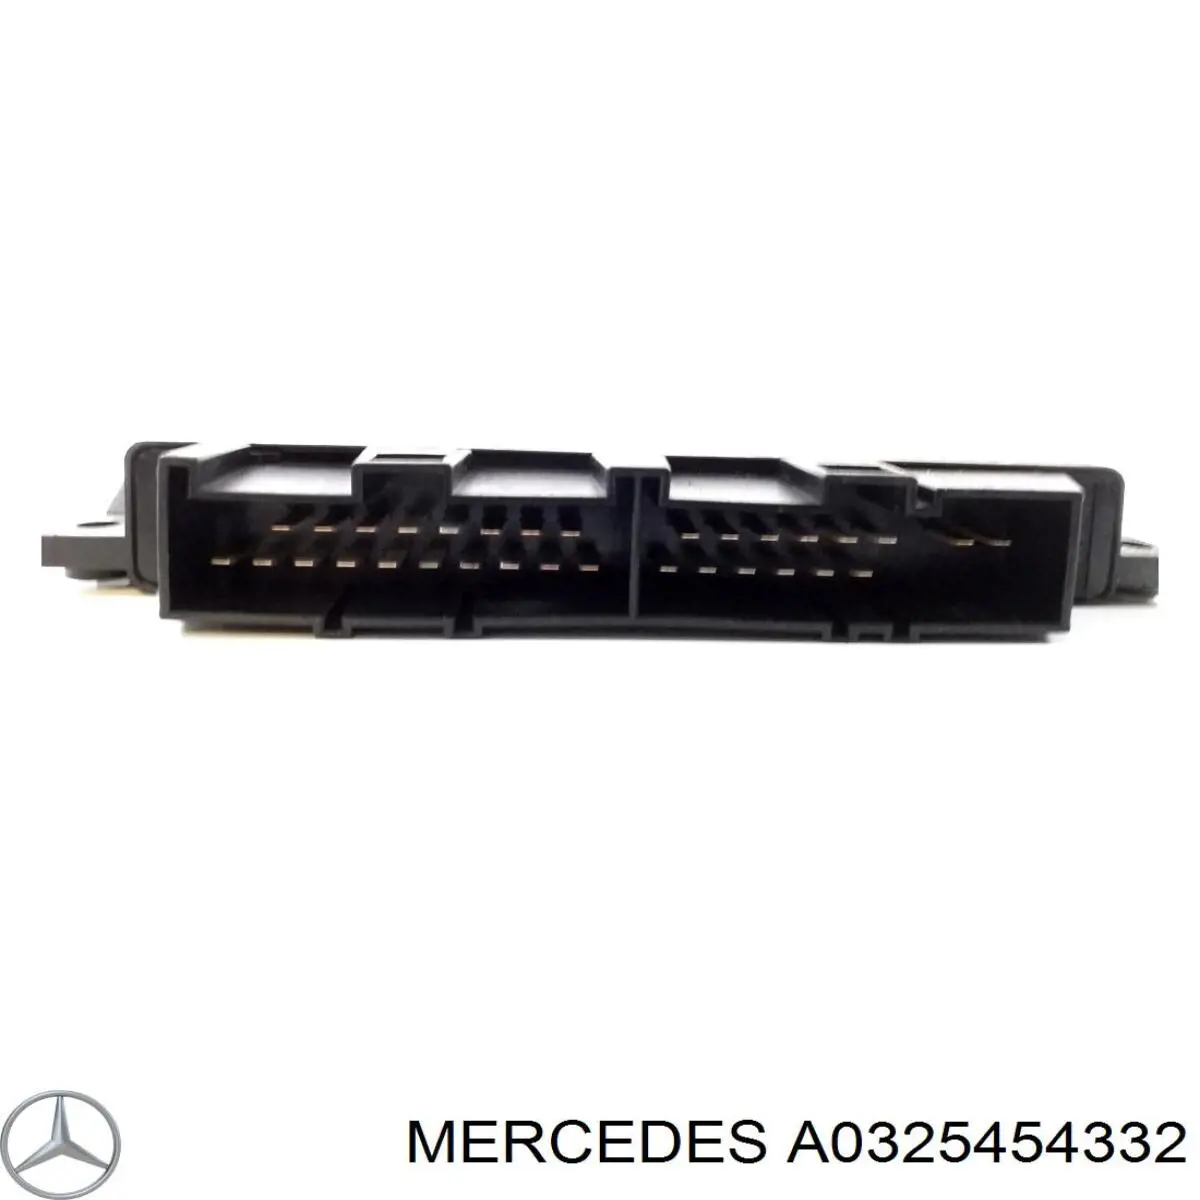 A0325454332 Mercedes